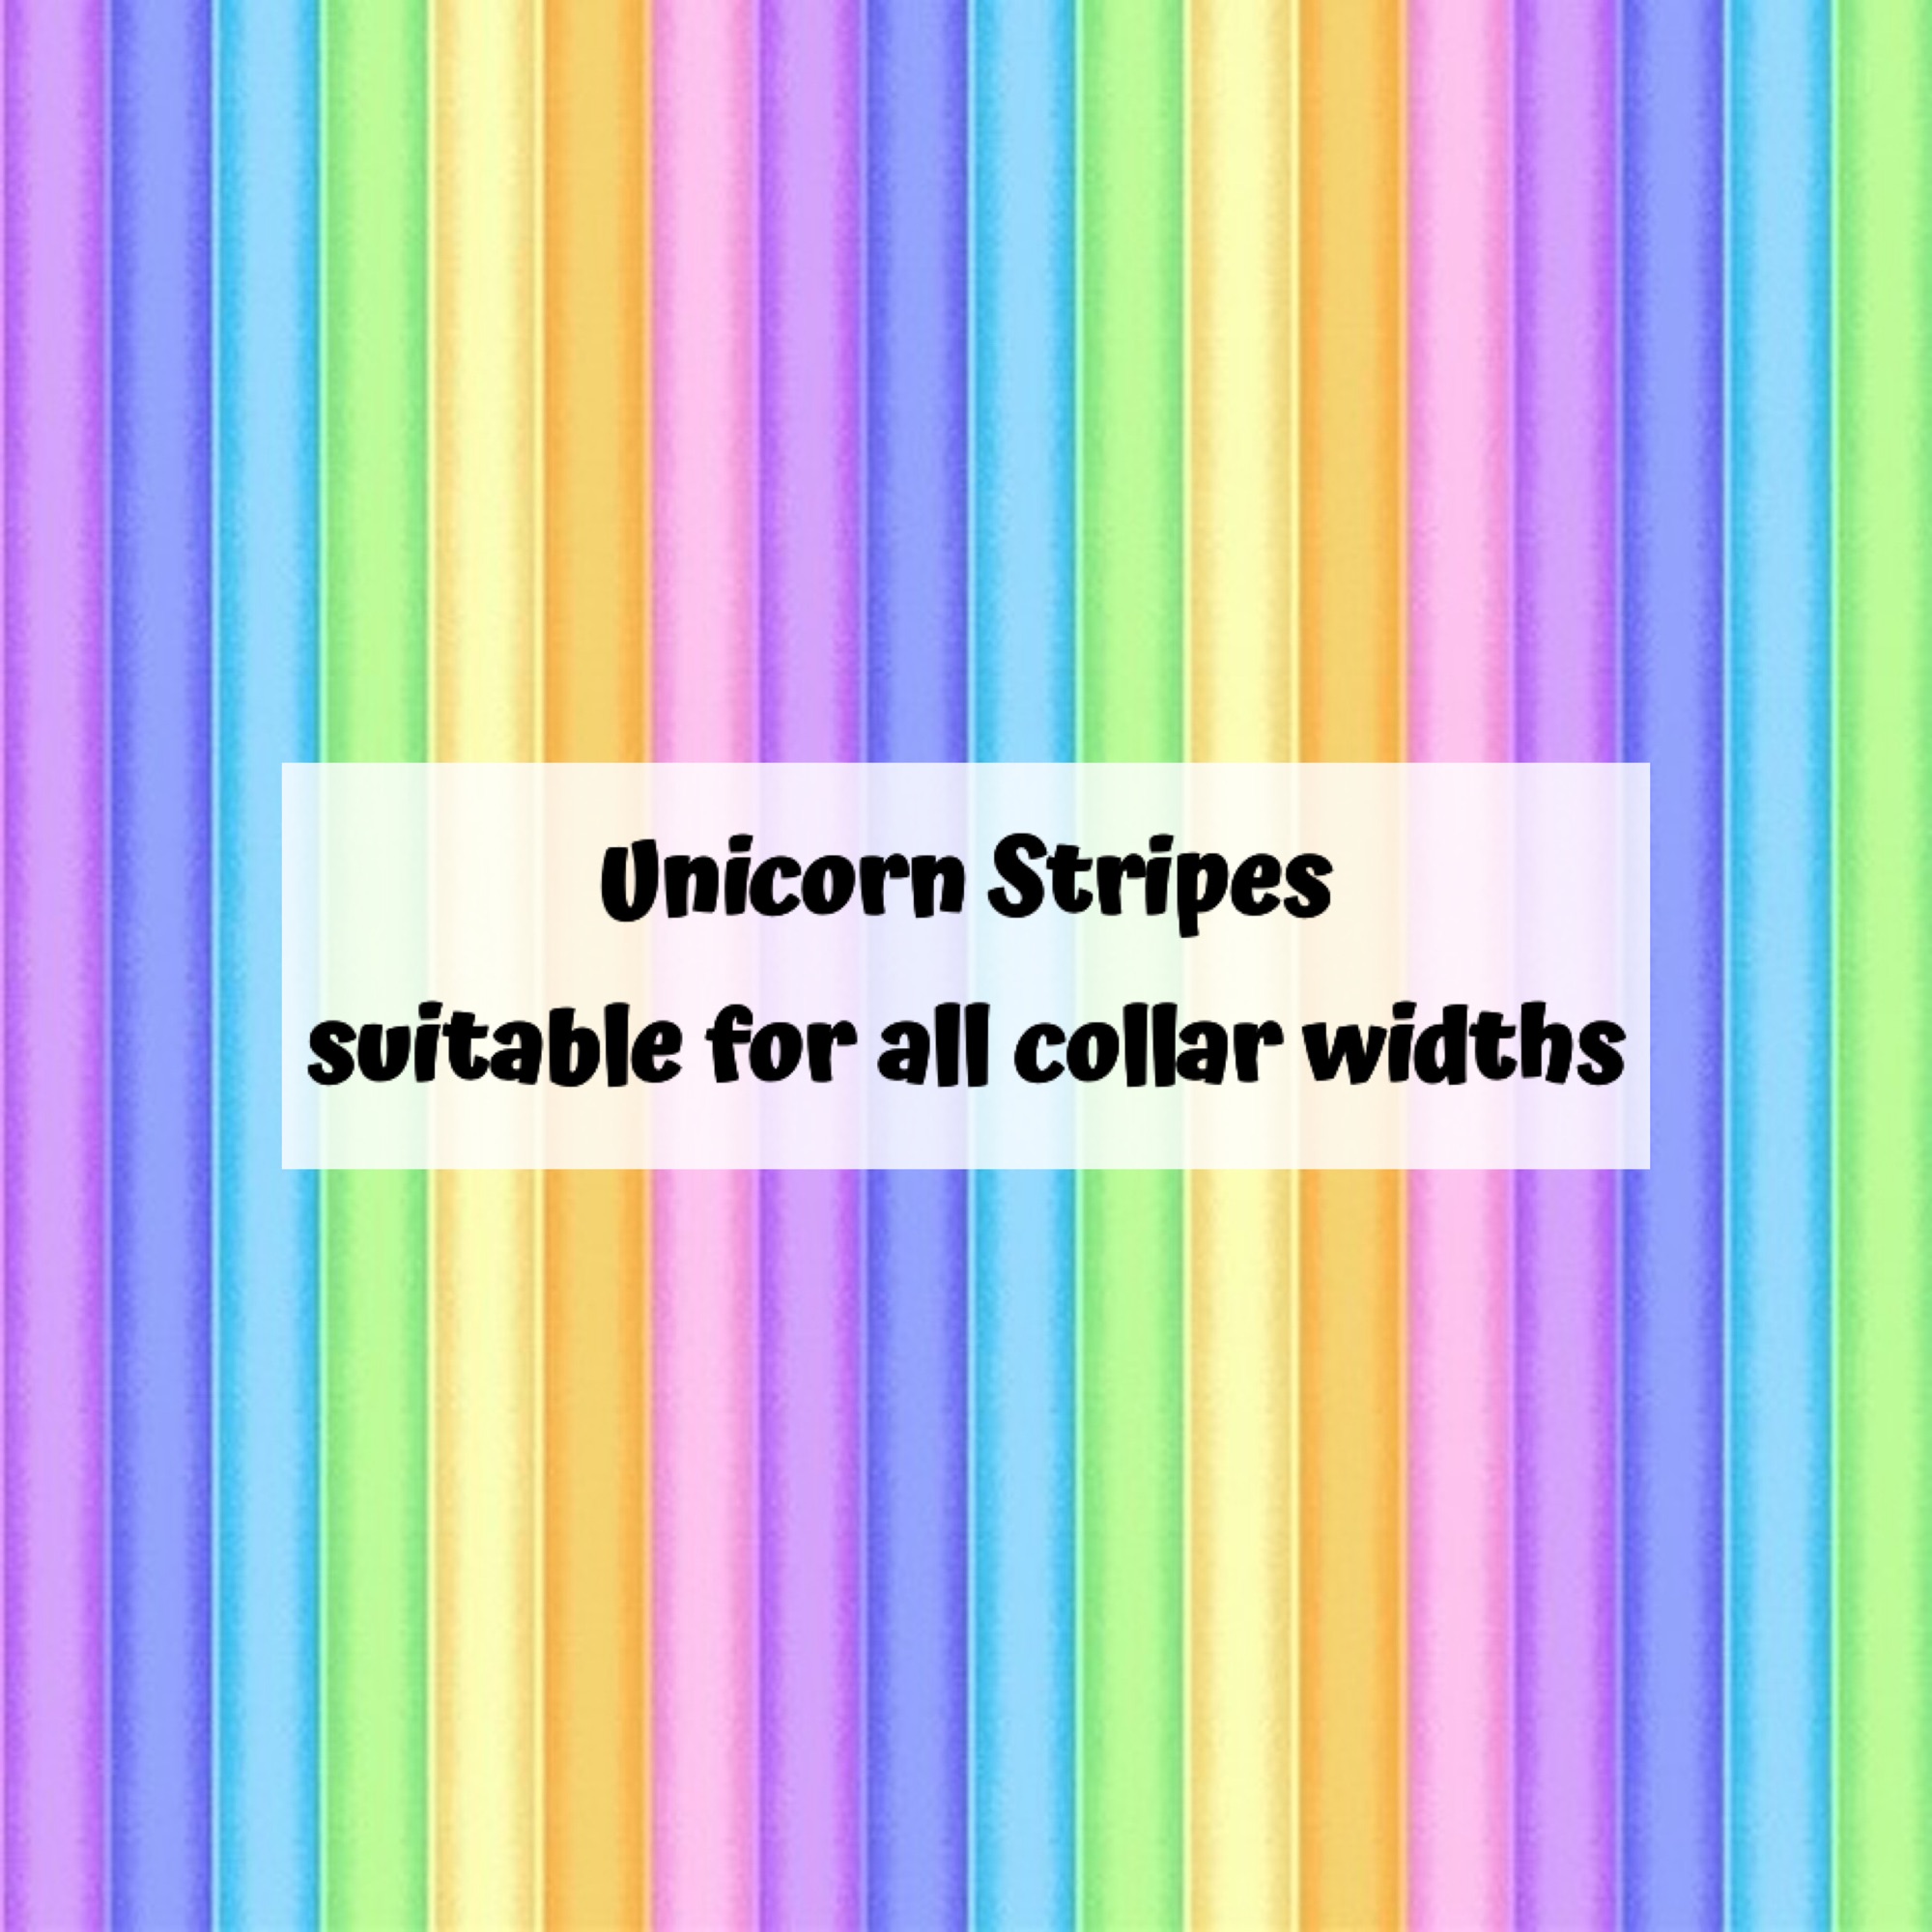 Unicorn Stripes